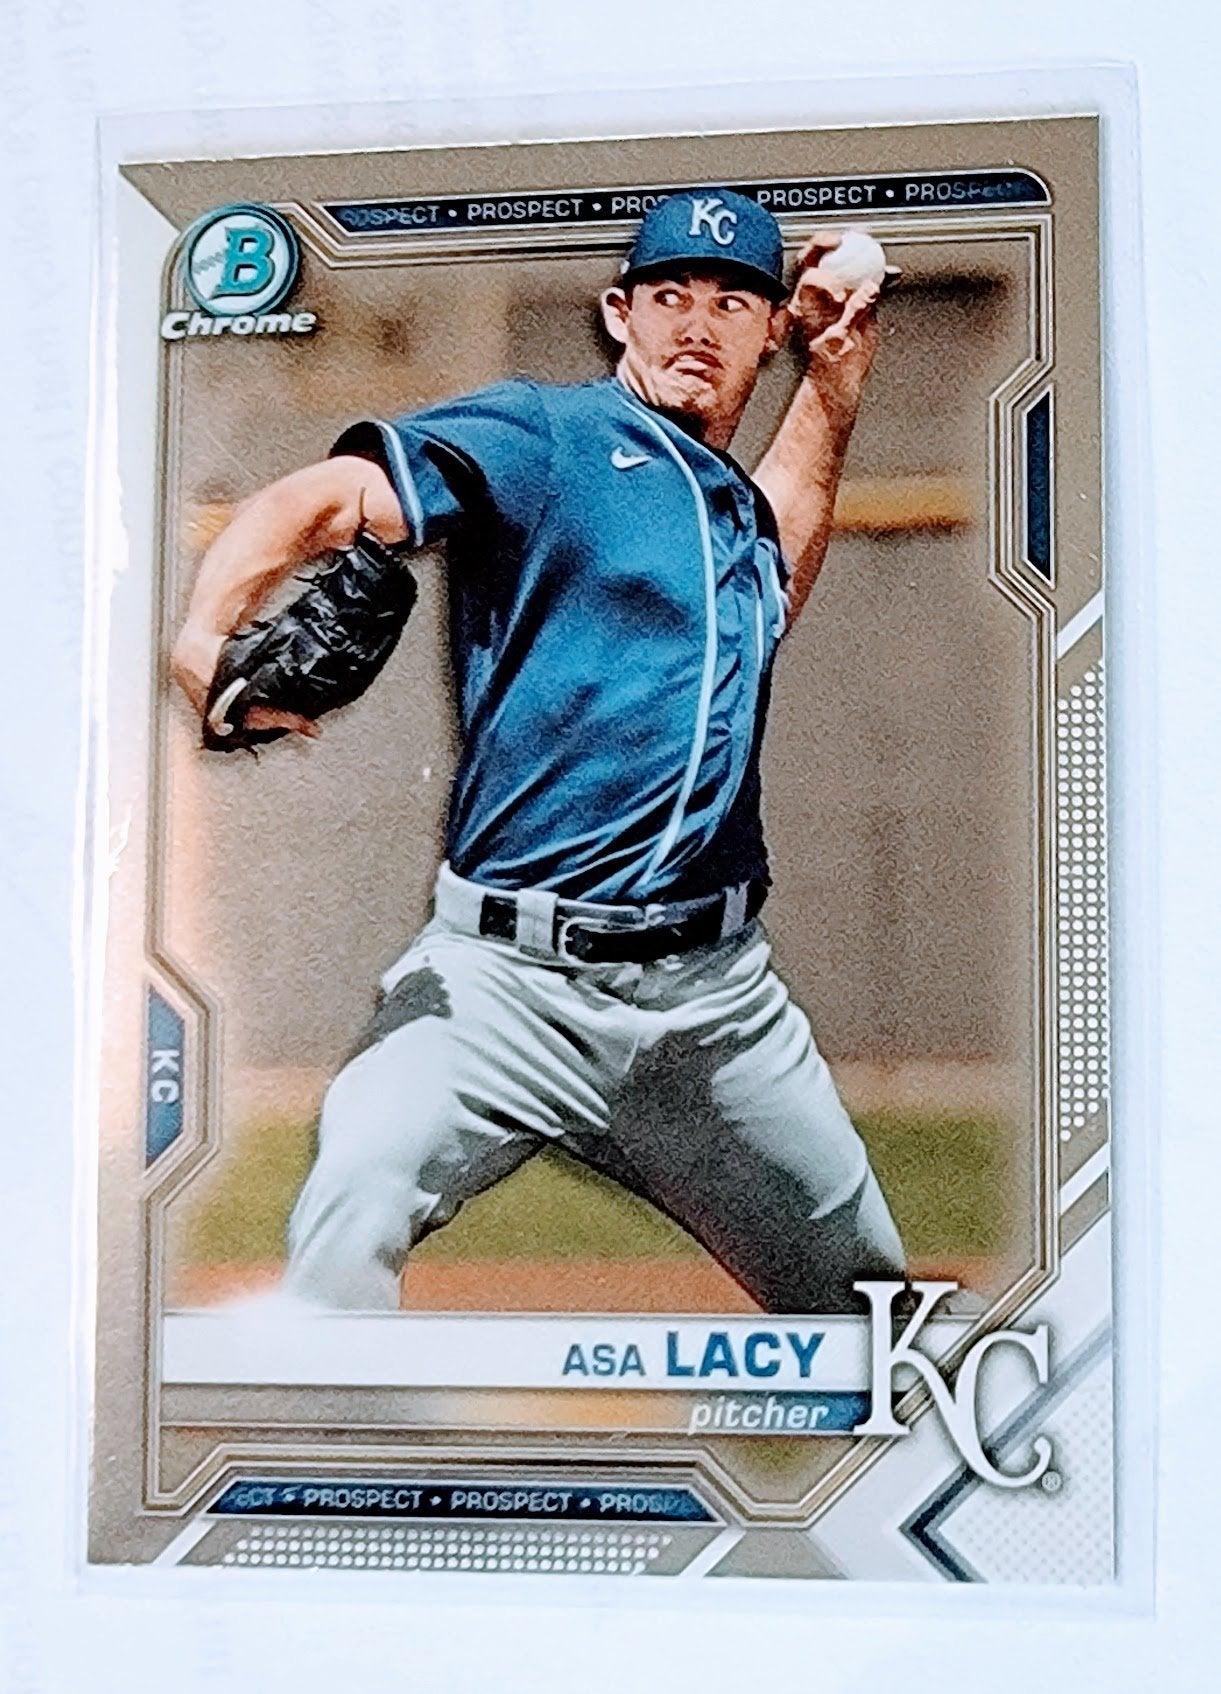 2021 Bowman Chrome Asa Lacy Prospect Baseball Card SMCB1 simple Xclusive Collectibles   